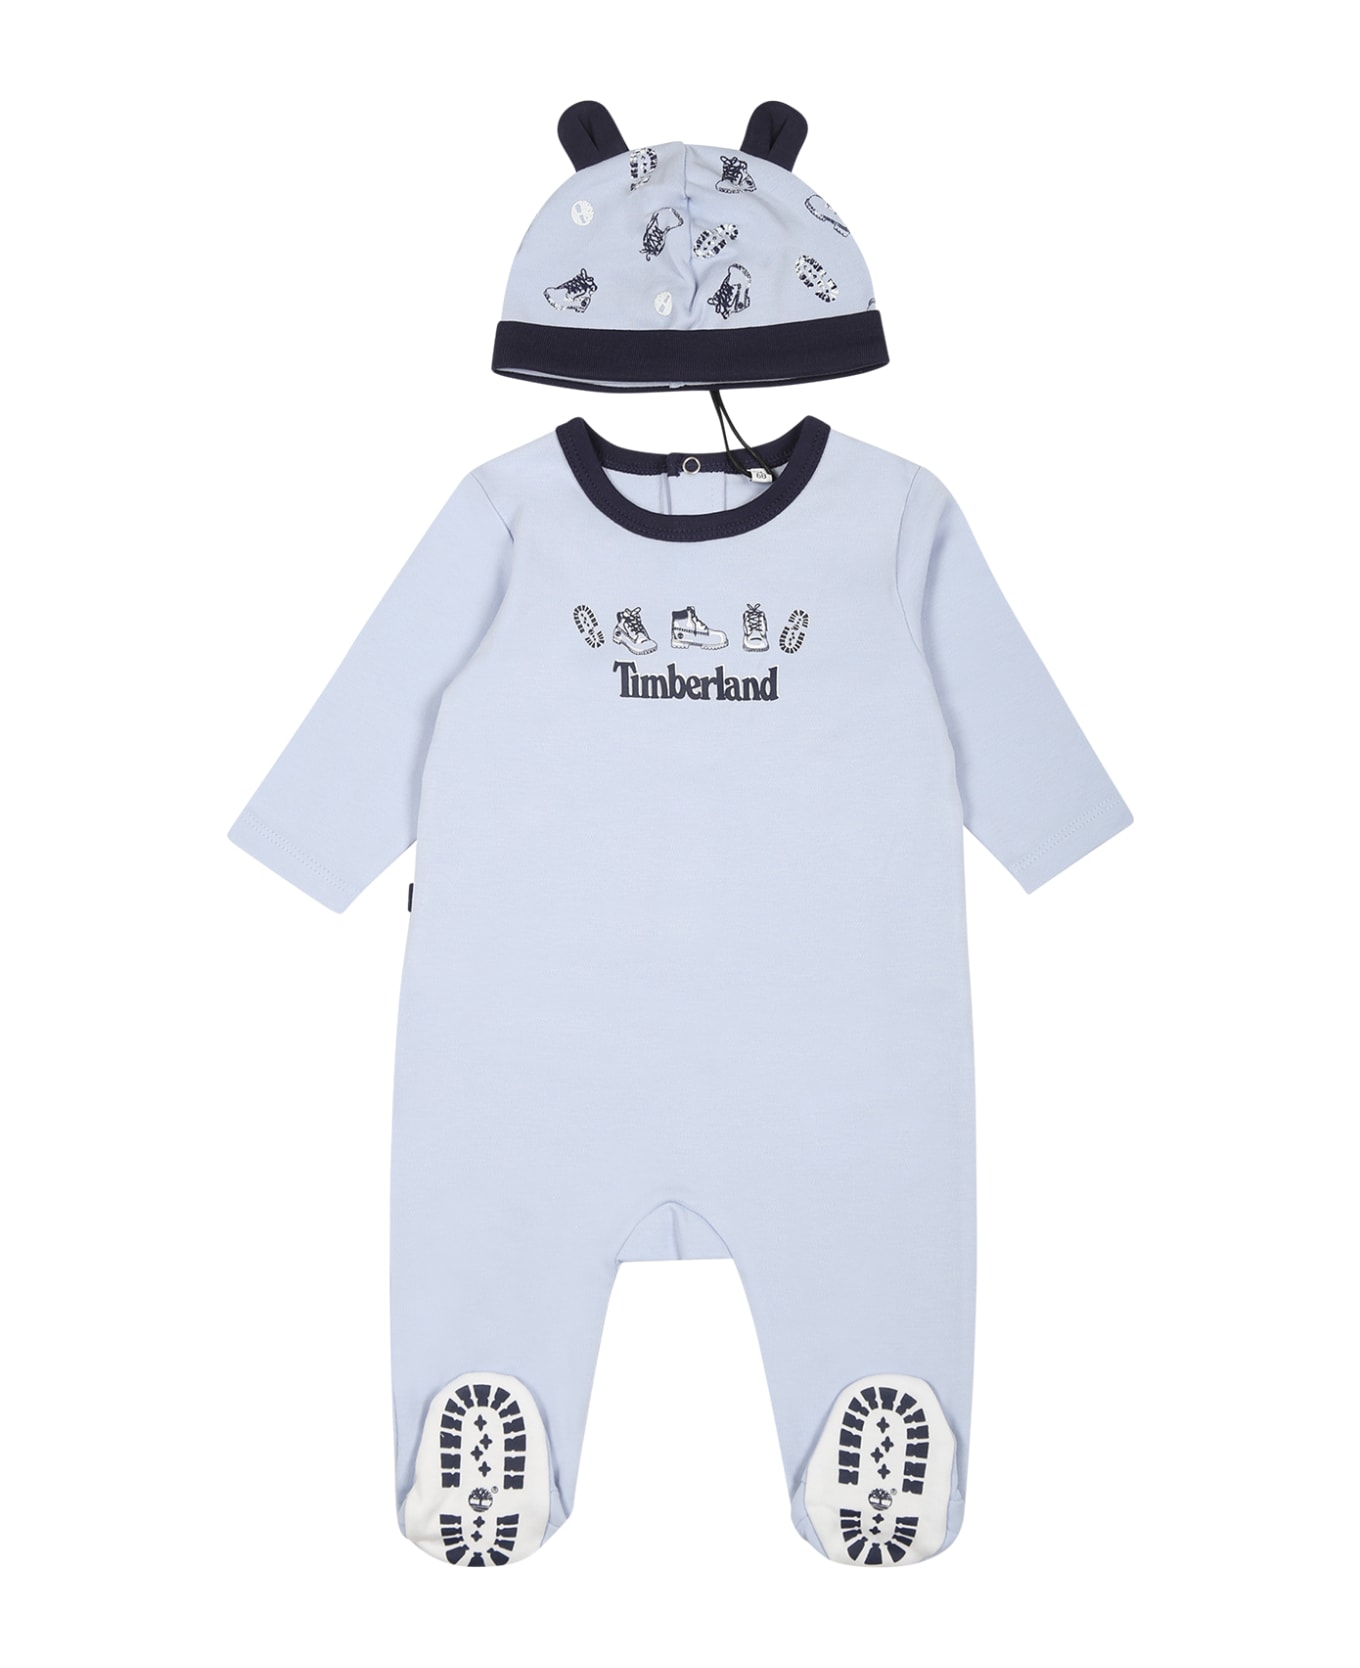 Timberland Light Blue Set For Baby Boy With Logo - Light Blue